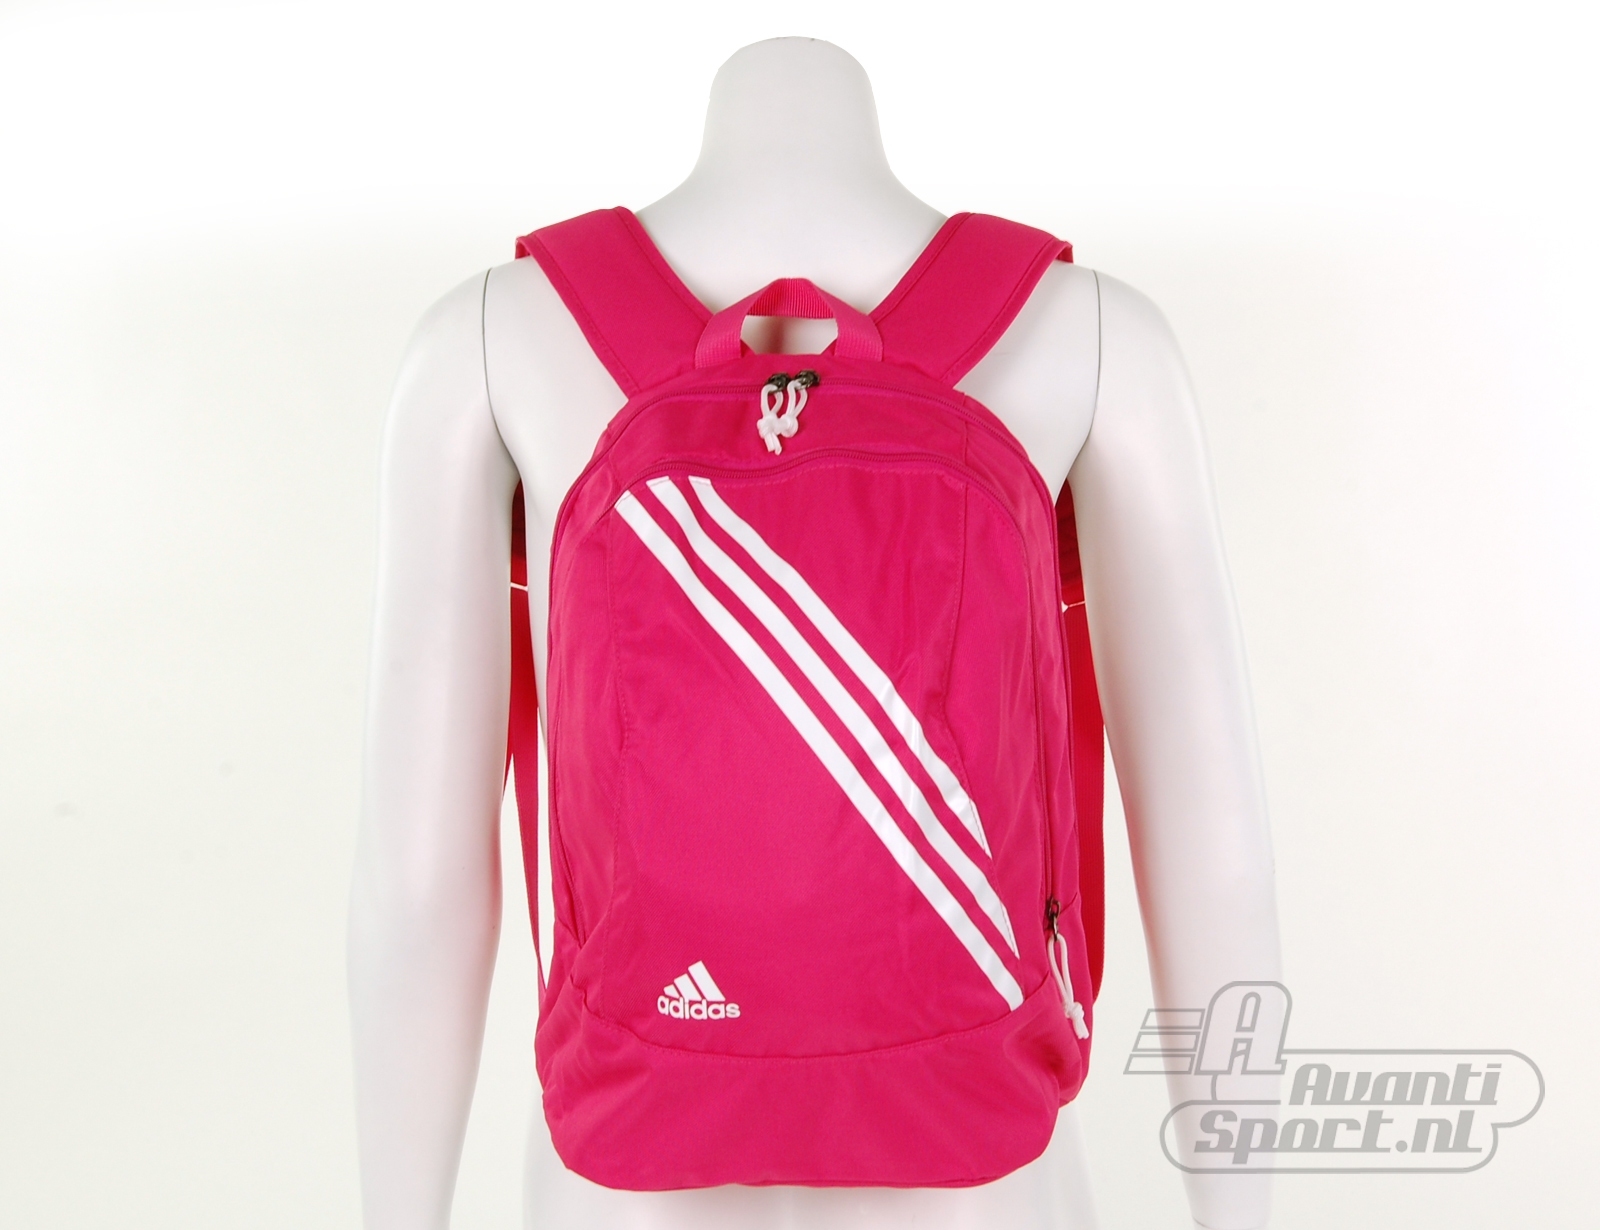 Avantisport - Adidas - Cr Bts 3 Stripes Insp - Radian Pink/white